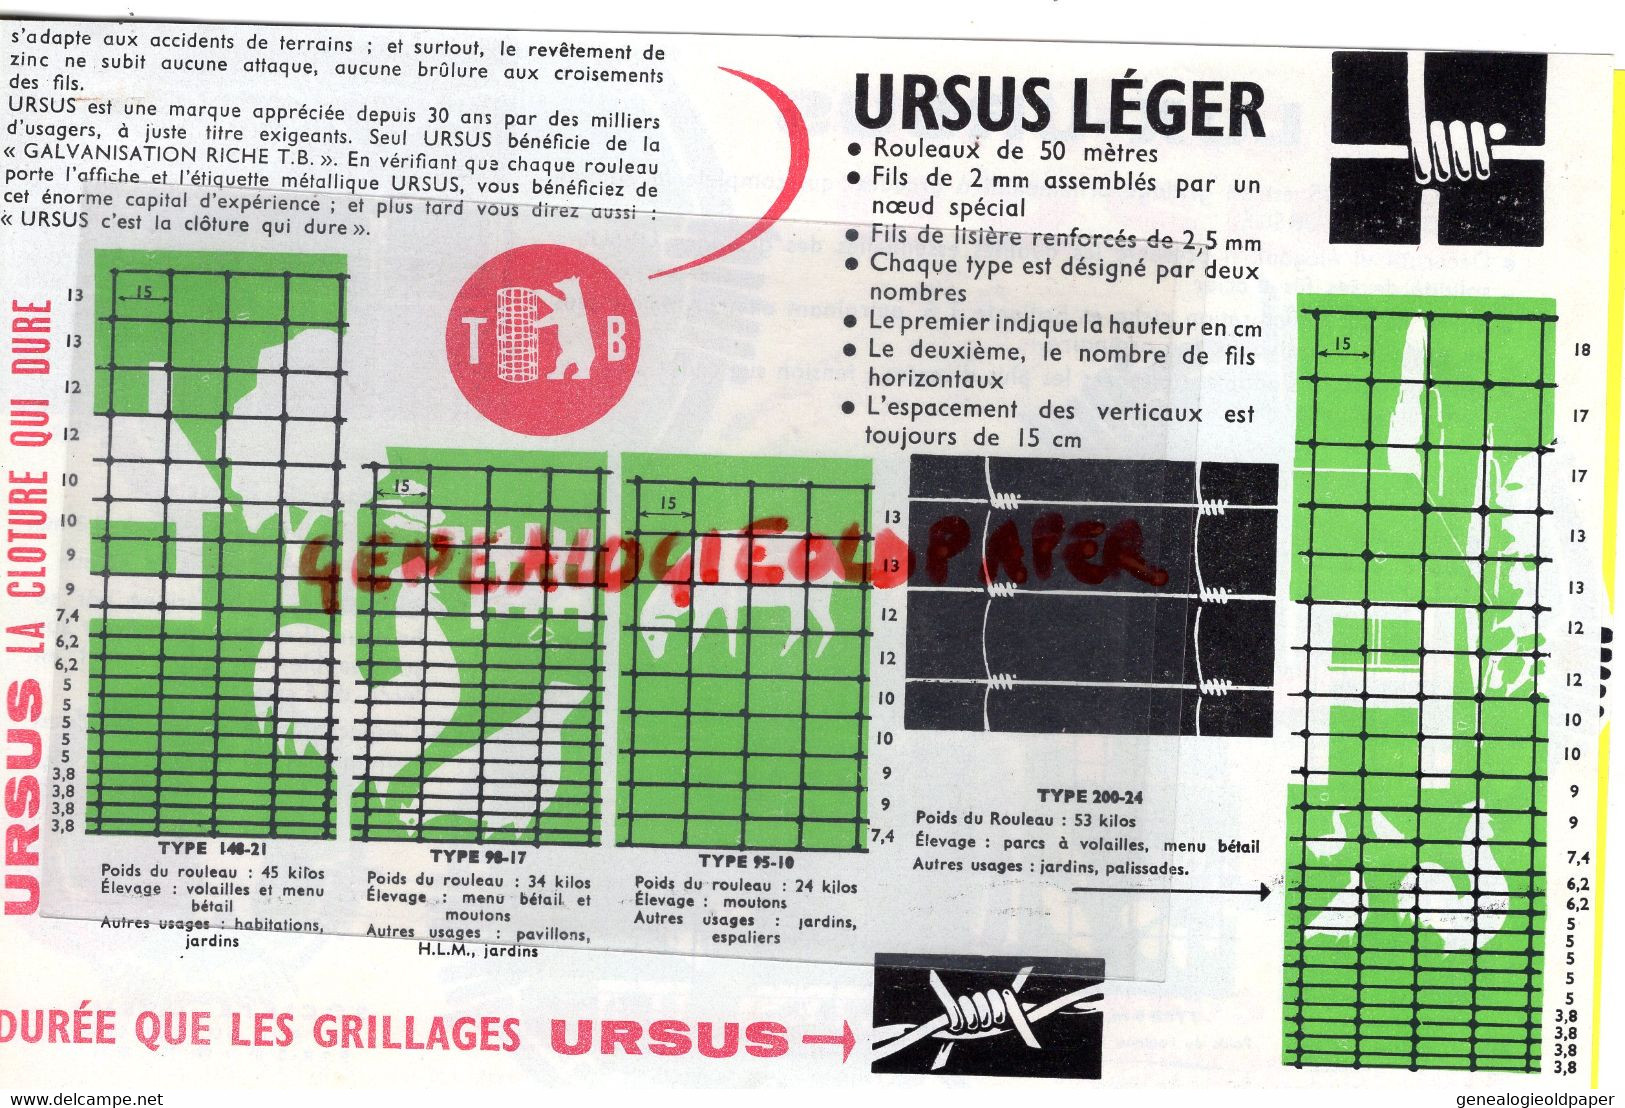 45- AMILLY MONTARGIS 75-PARIS- CATALOGUE CLOTURE AGRICULTURE TREILLAGE URSUS + TARIF 1962-GRILLAGES - 17 RUE DU COLISEE - Agriculture